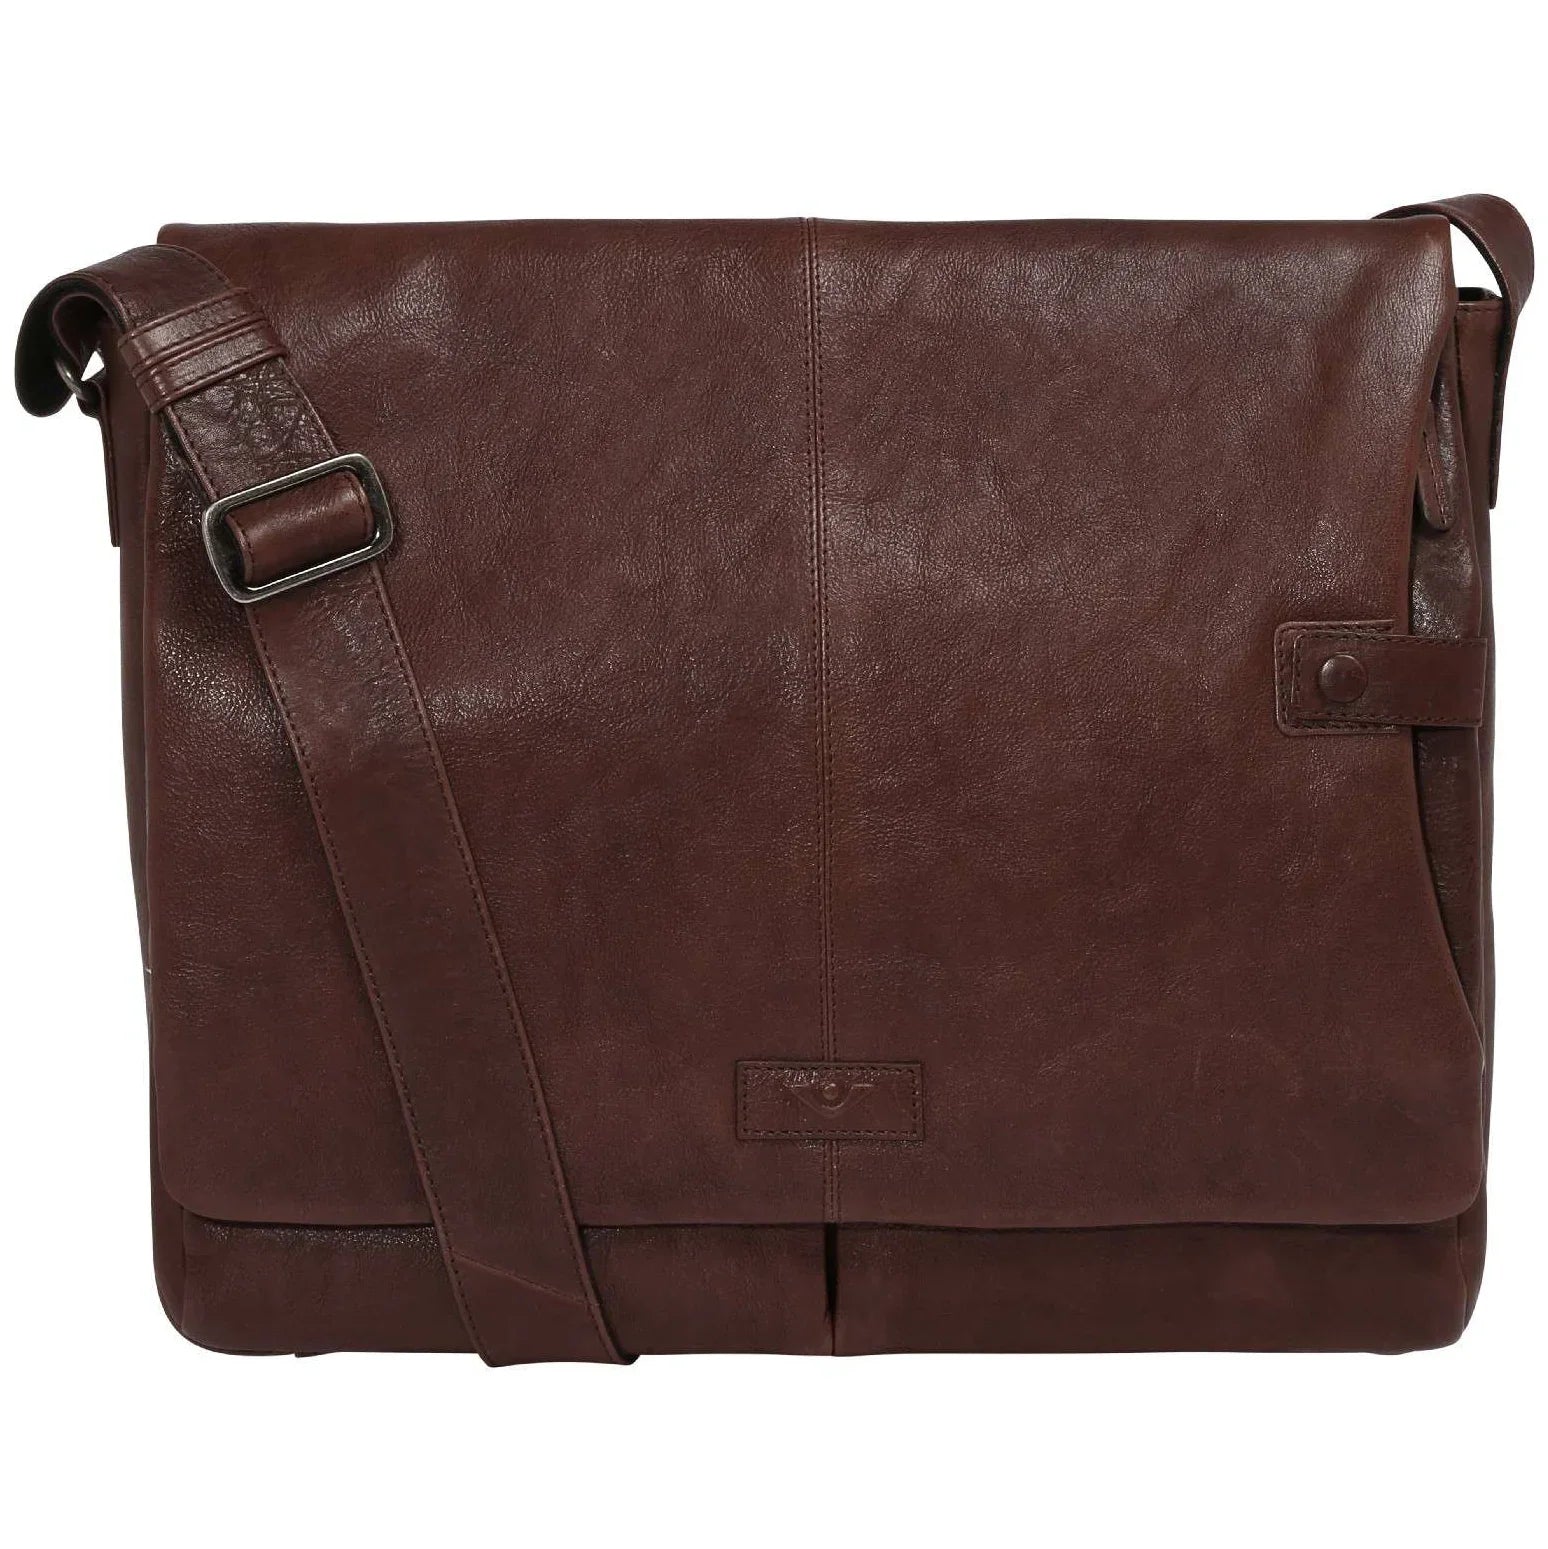 VOi-Design Dakota Filiz shoulder bag 36 cm - Brown